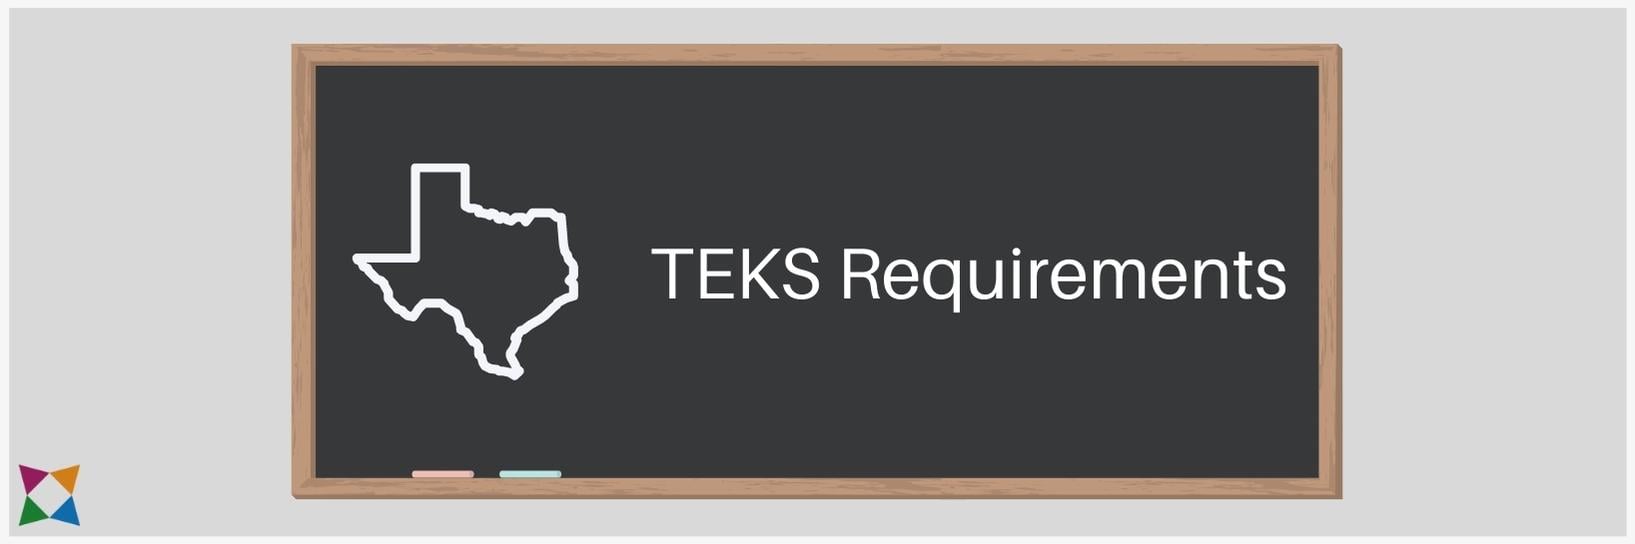 texas-teks-requirements-principles-information-technology